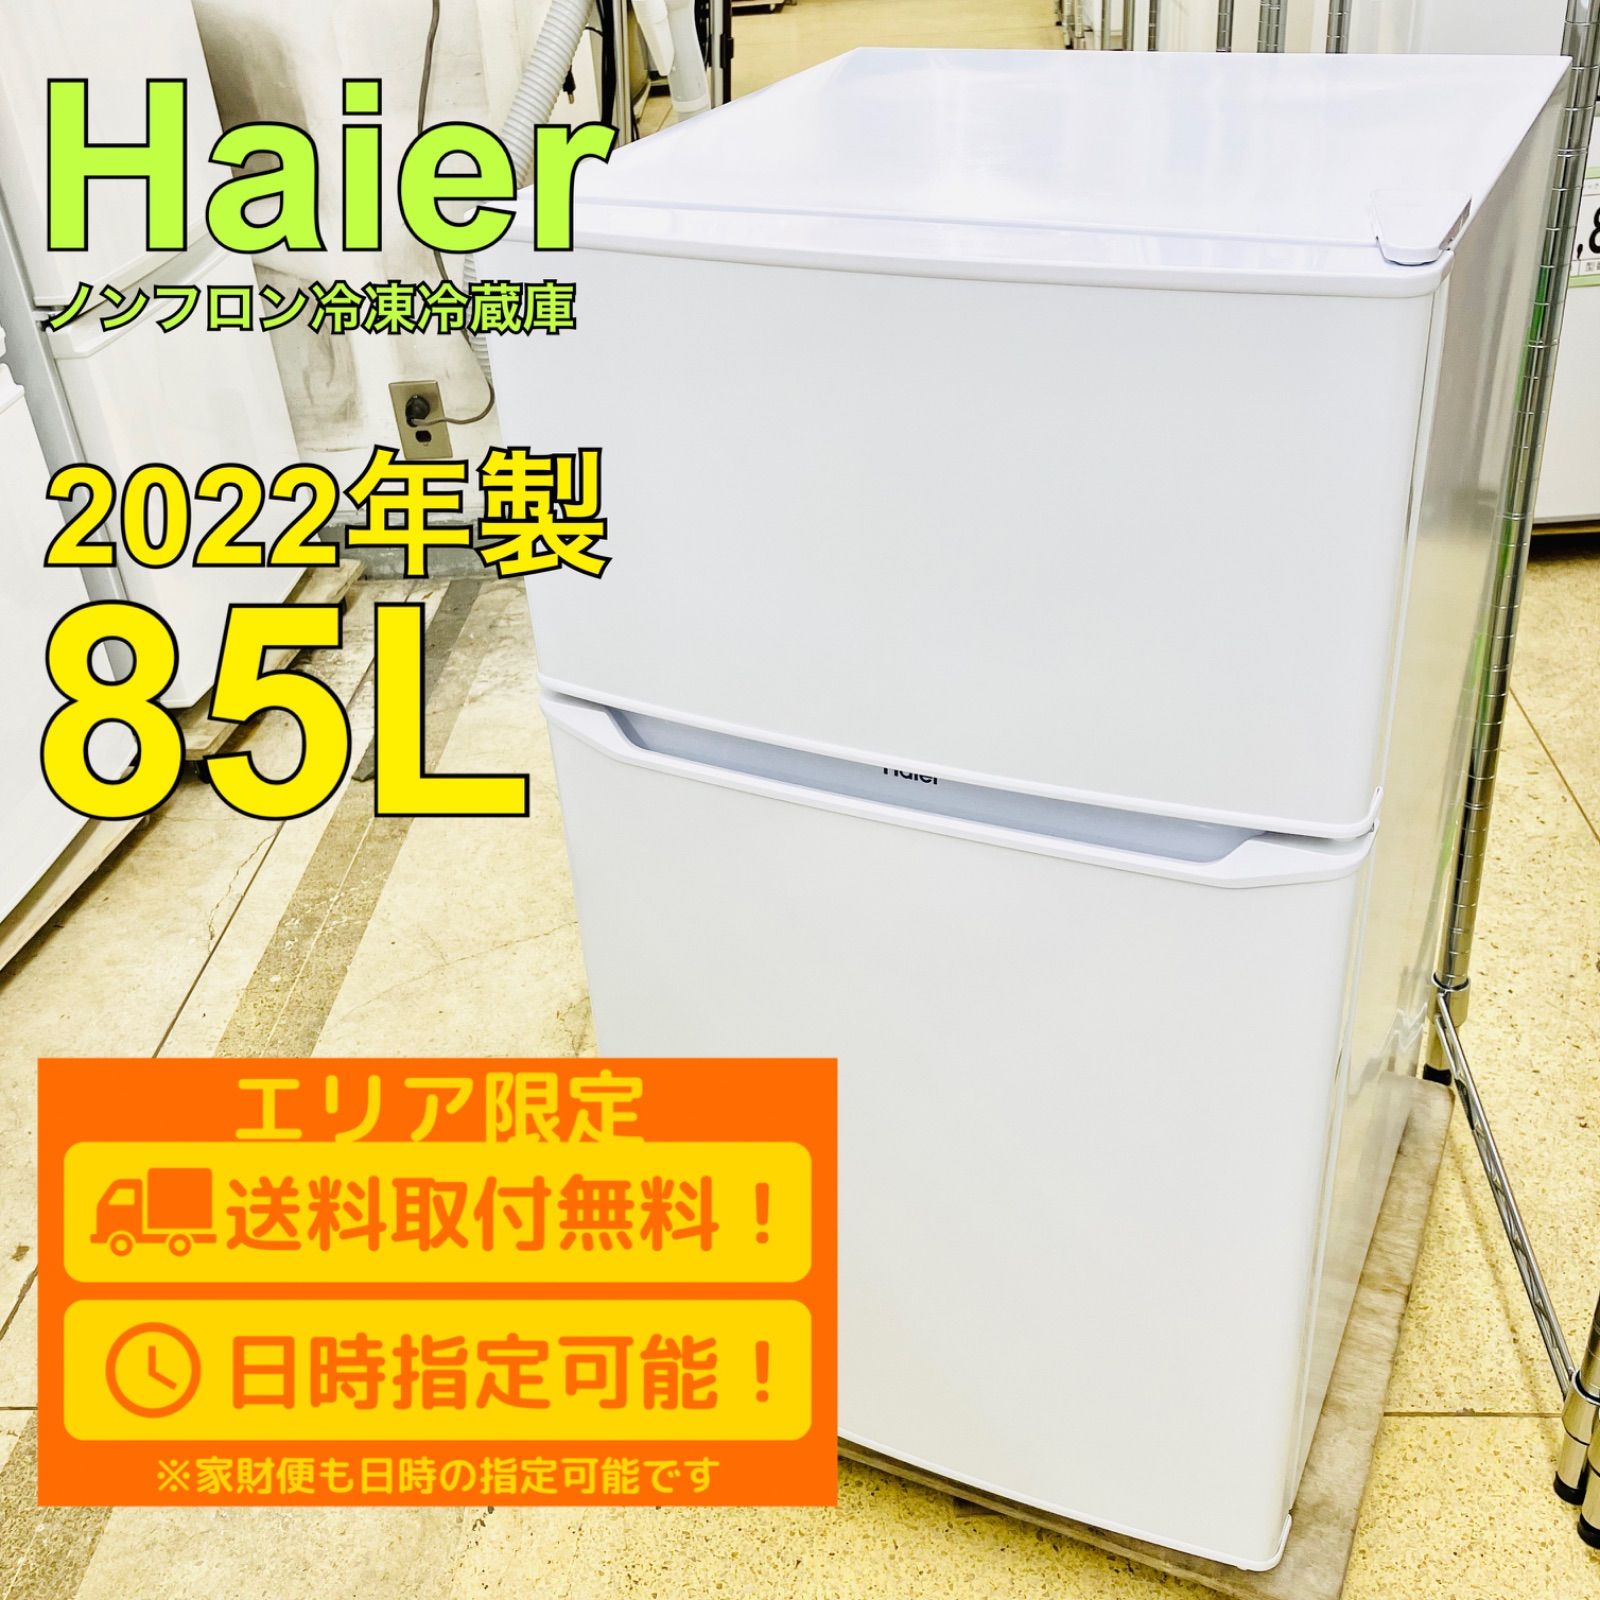 Haier 85L 冷蔵庫 コンパクト 一人暮らし向け【地域限定配送無料】-